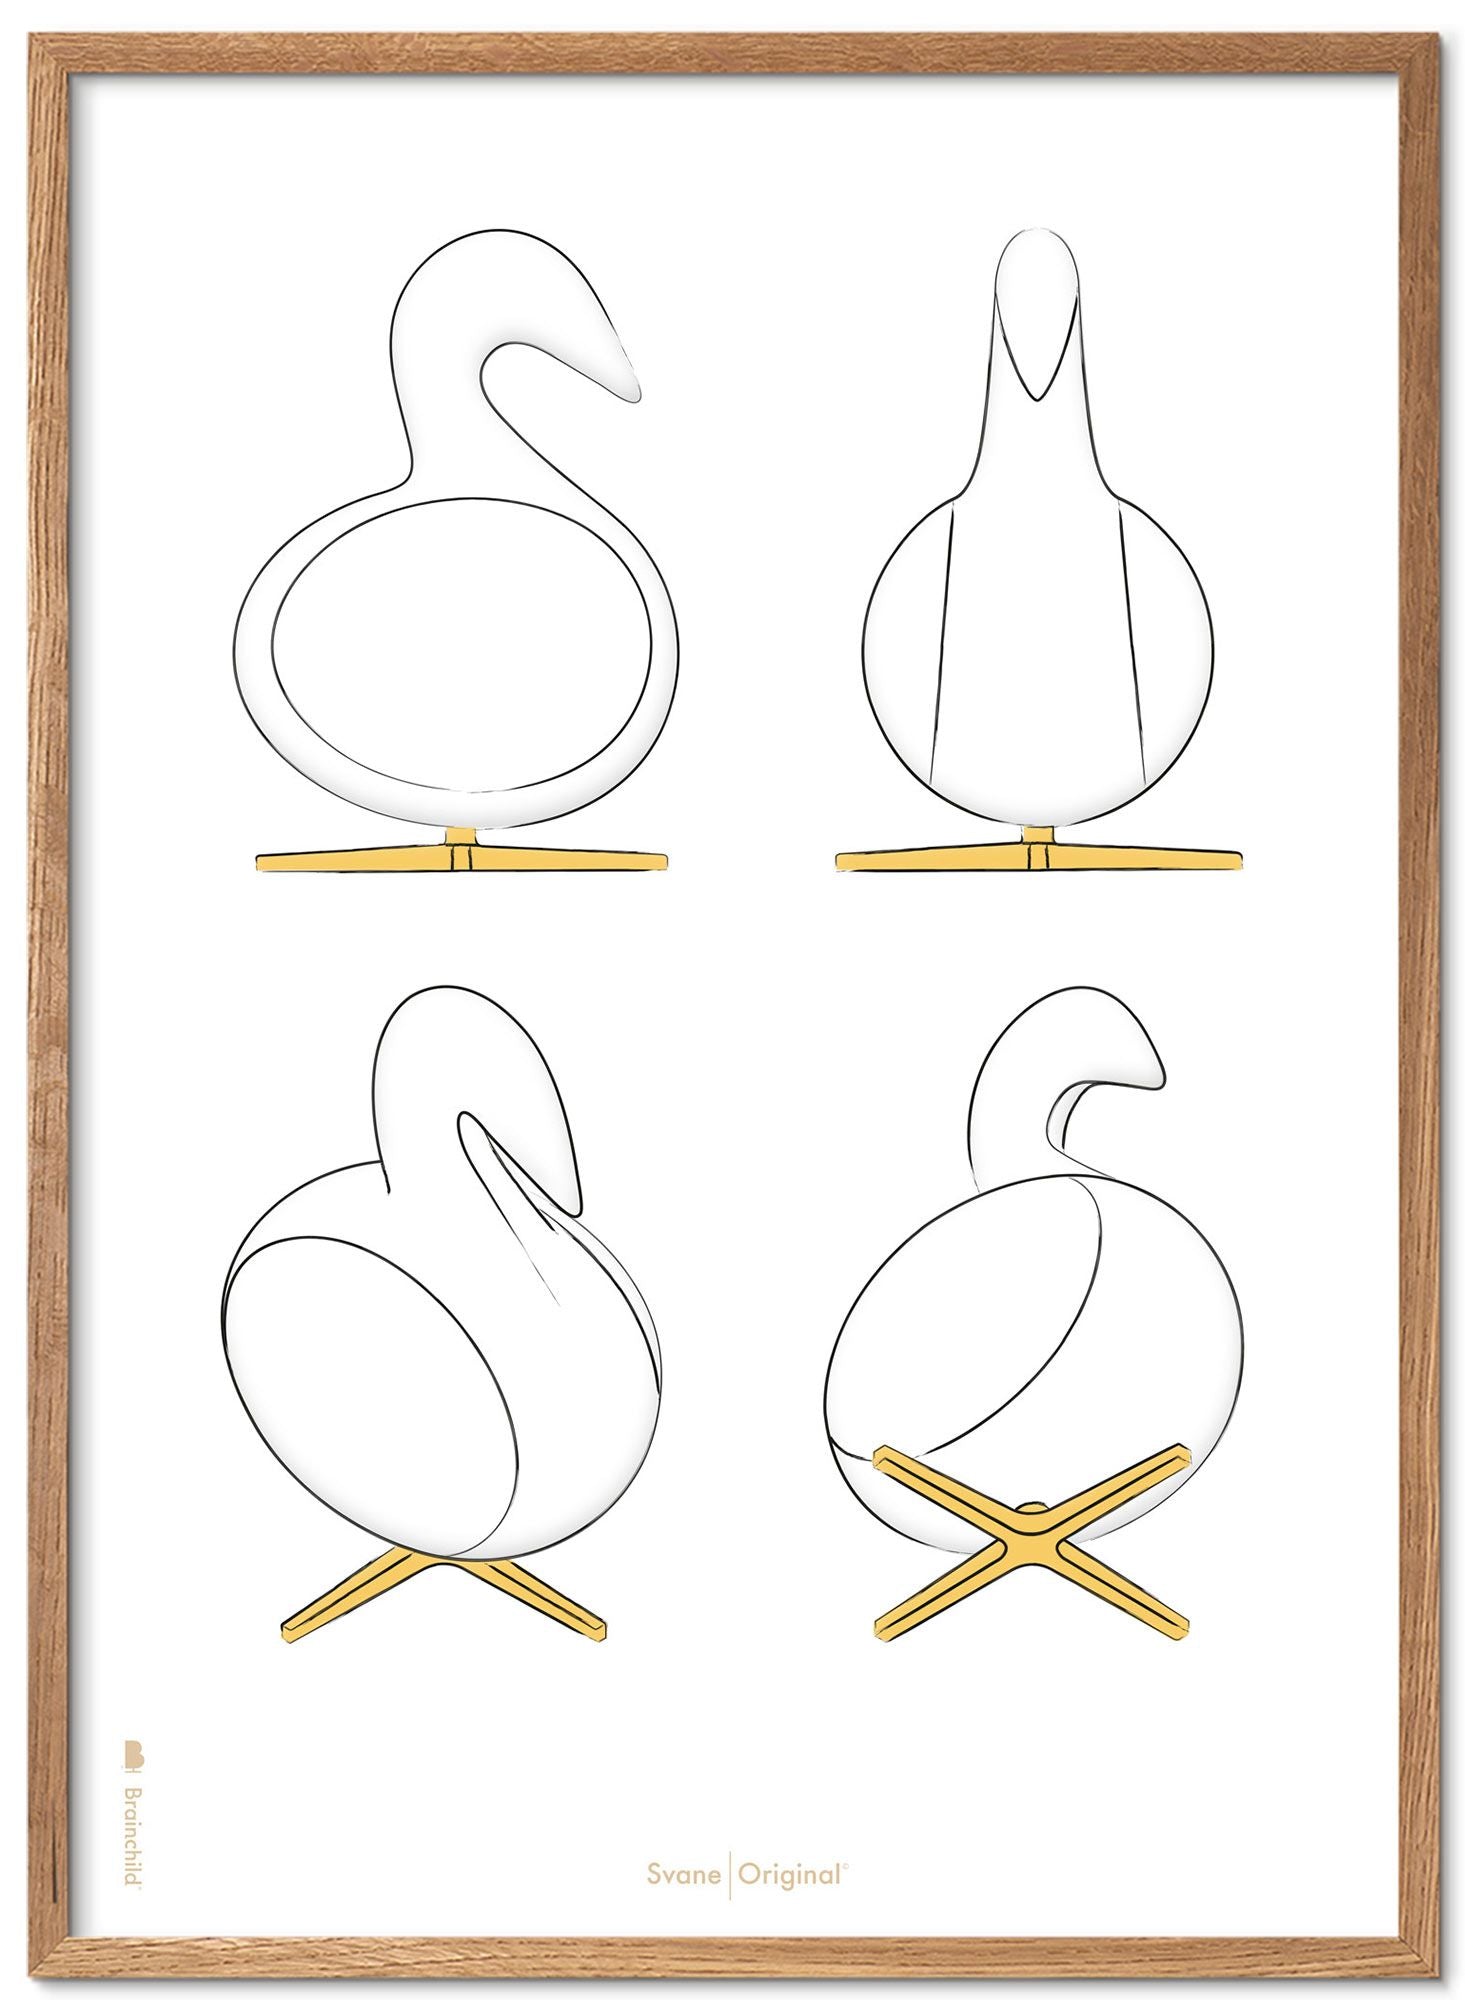 Brainchild Swan Design Sketches Poster Frame Made Of Light Wood 70x100 Cm, White Background